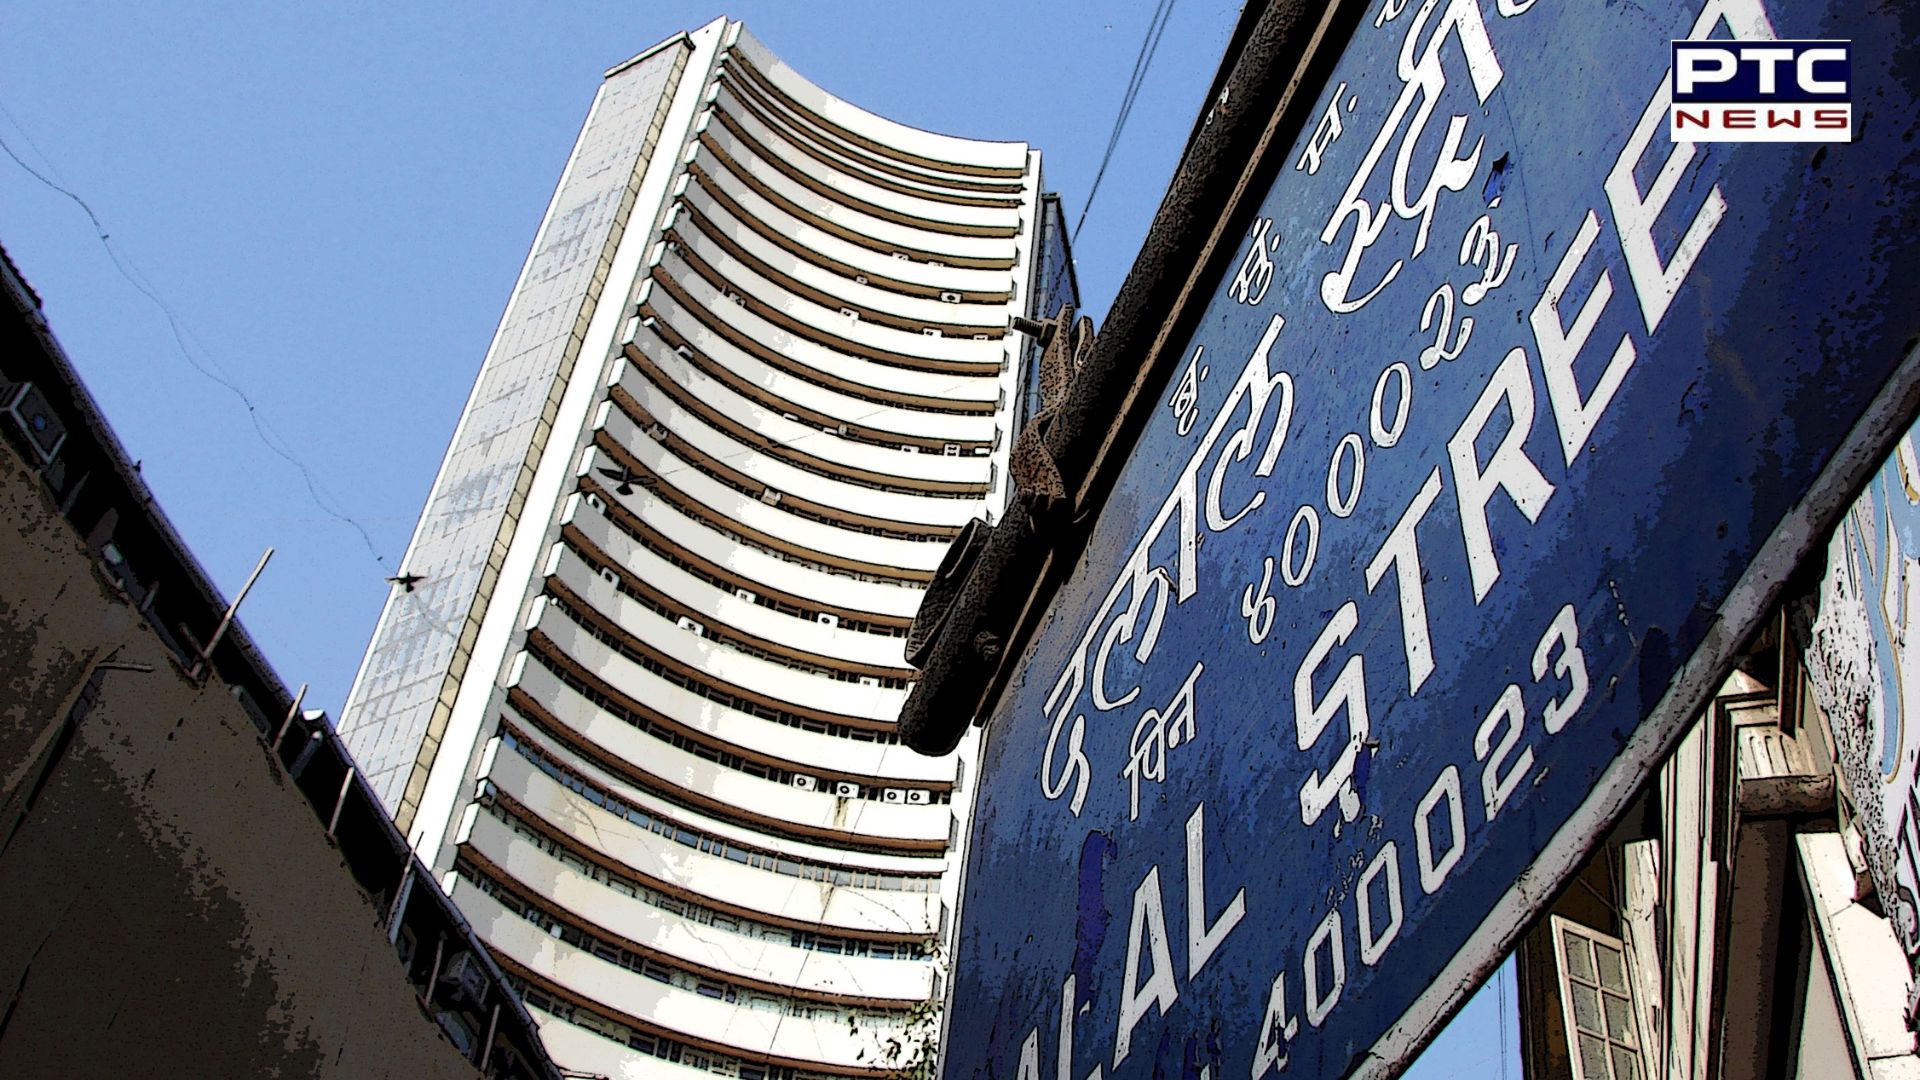 Dalal Street bloodbath: Sensex plunges 1,000 points, unraveling market crash causes